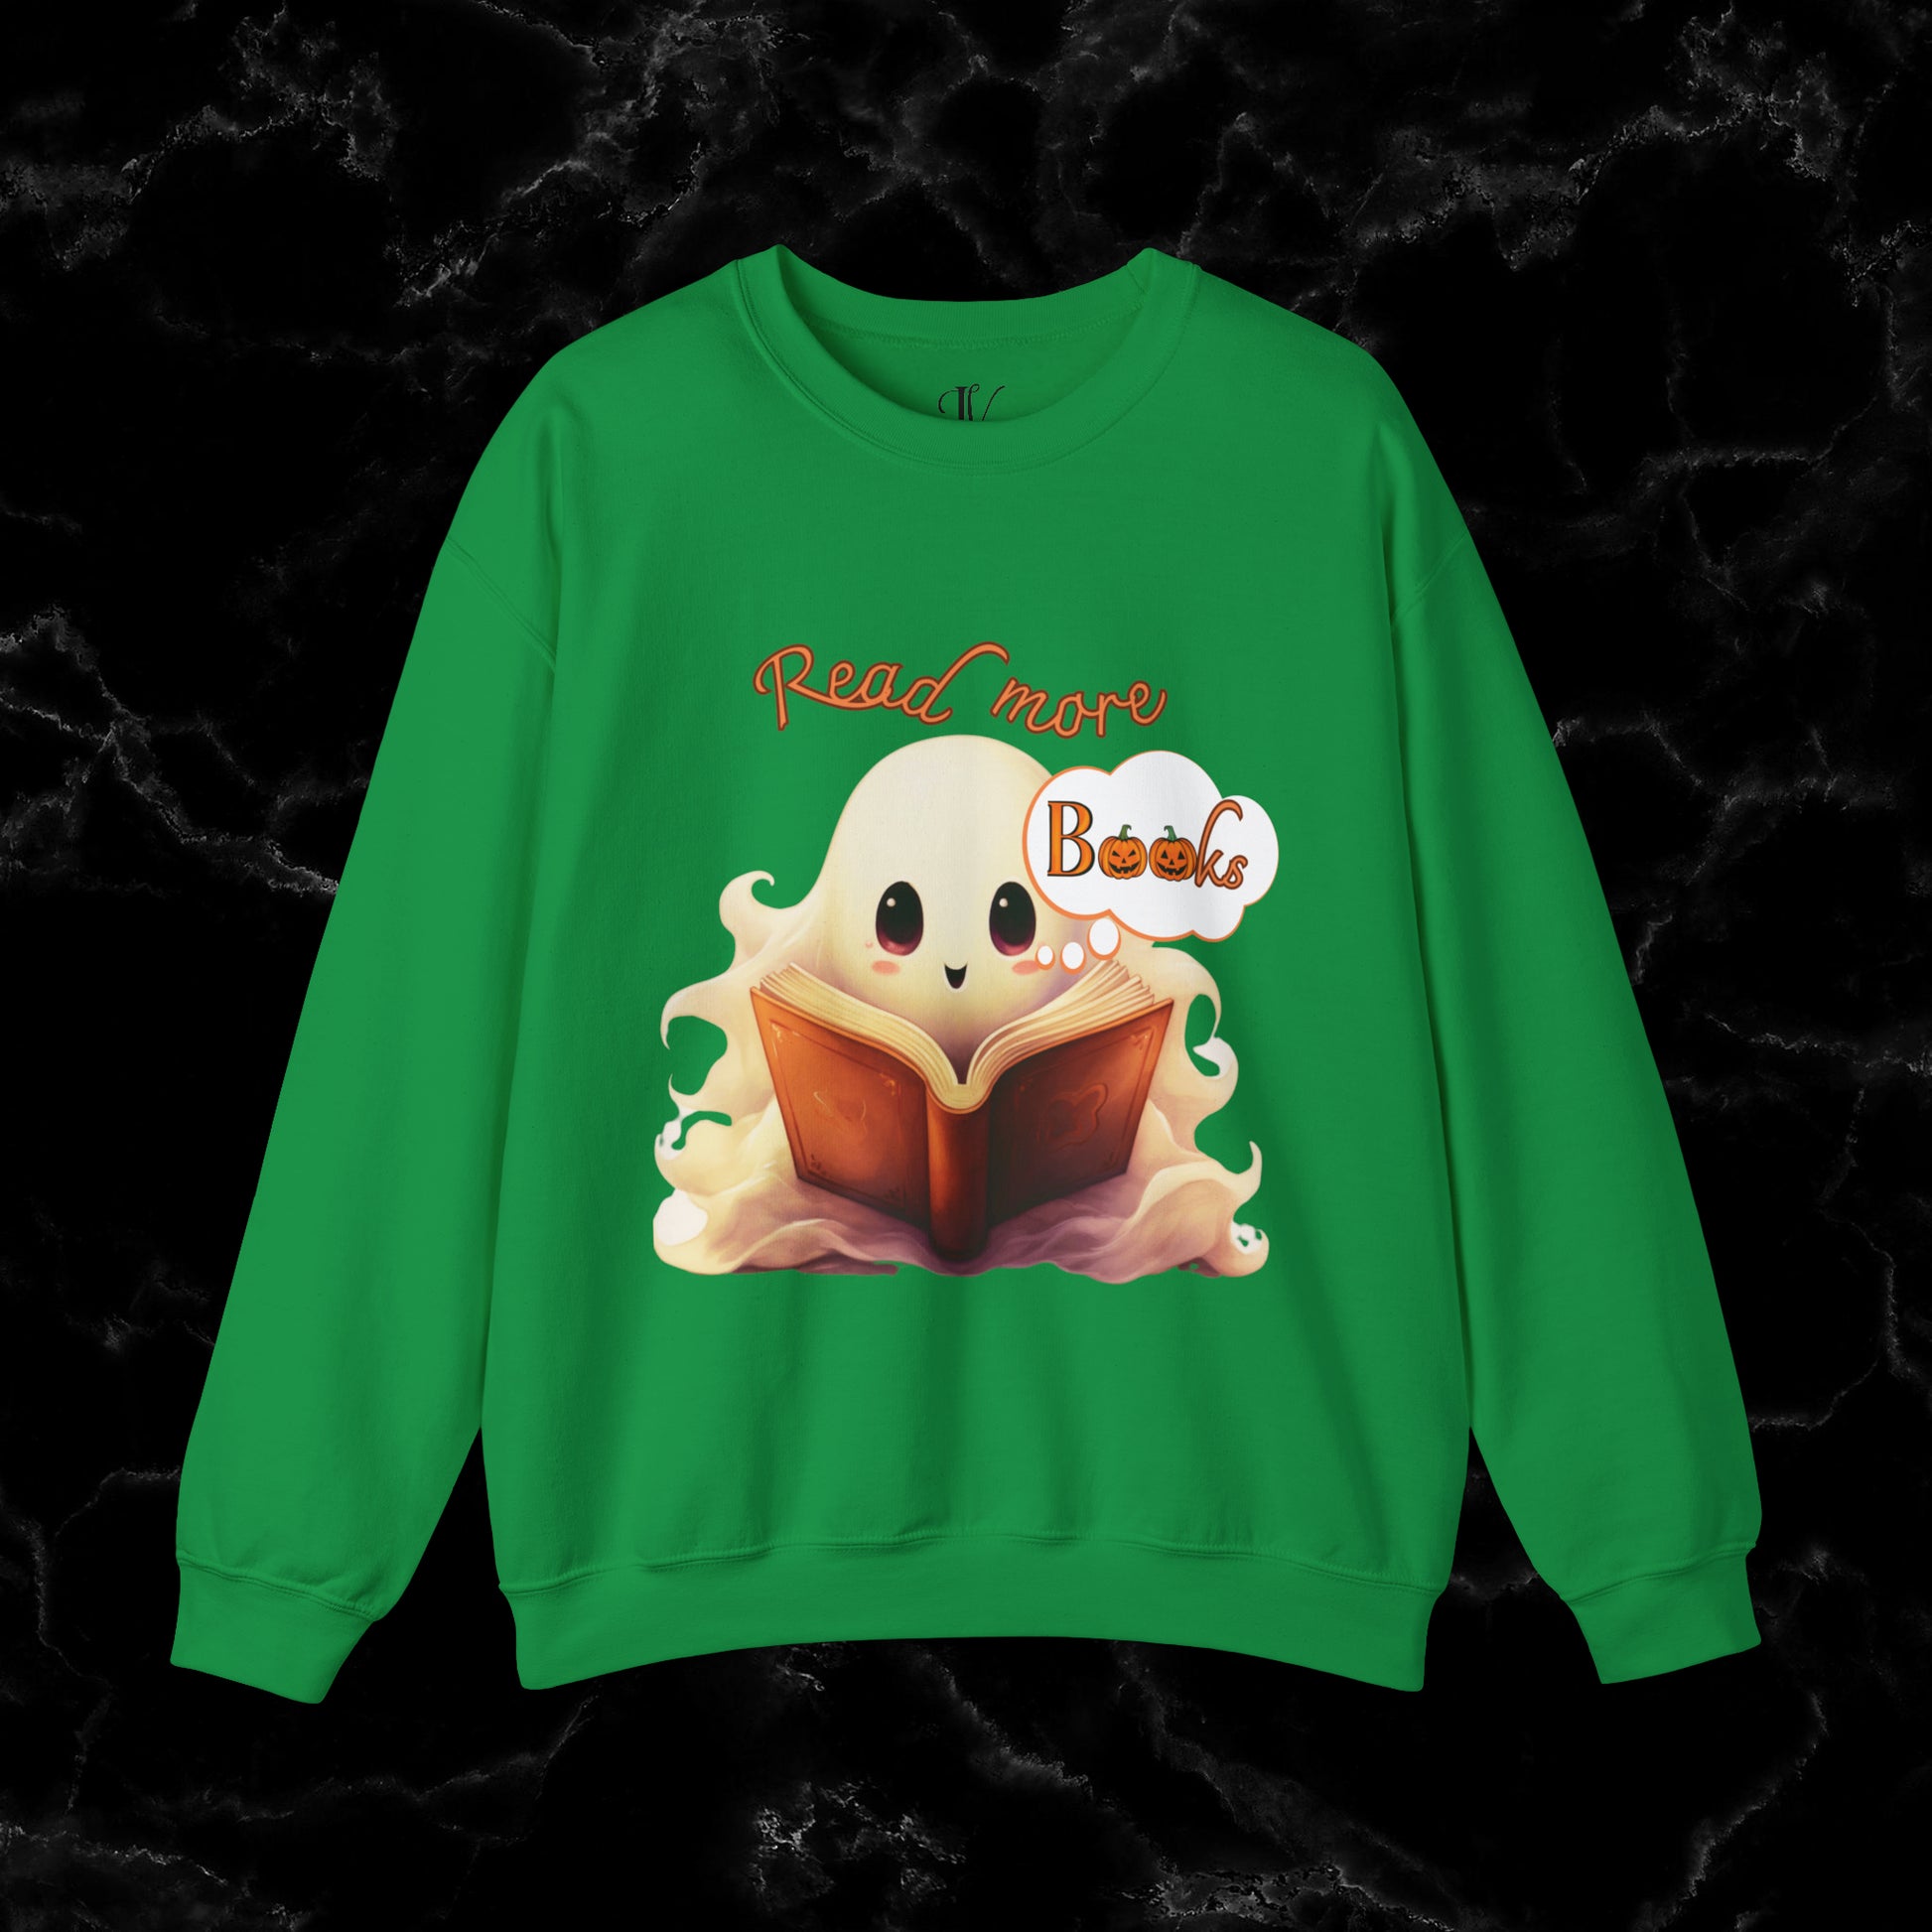 Read More Books Sweatshirt - Book Lover Halloween Sweater for Librarians and Students Sweatshirt S Irish Green 